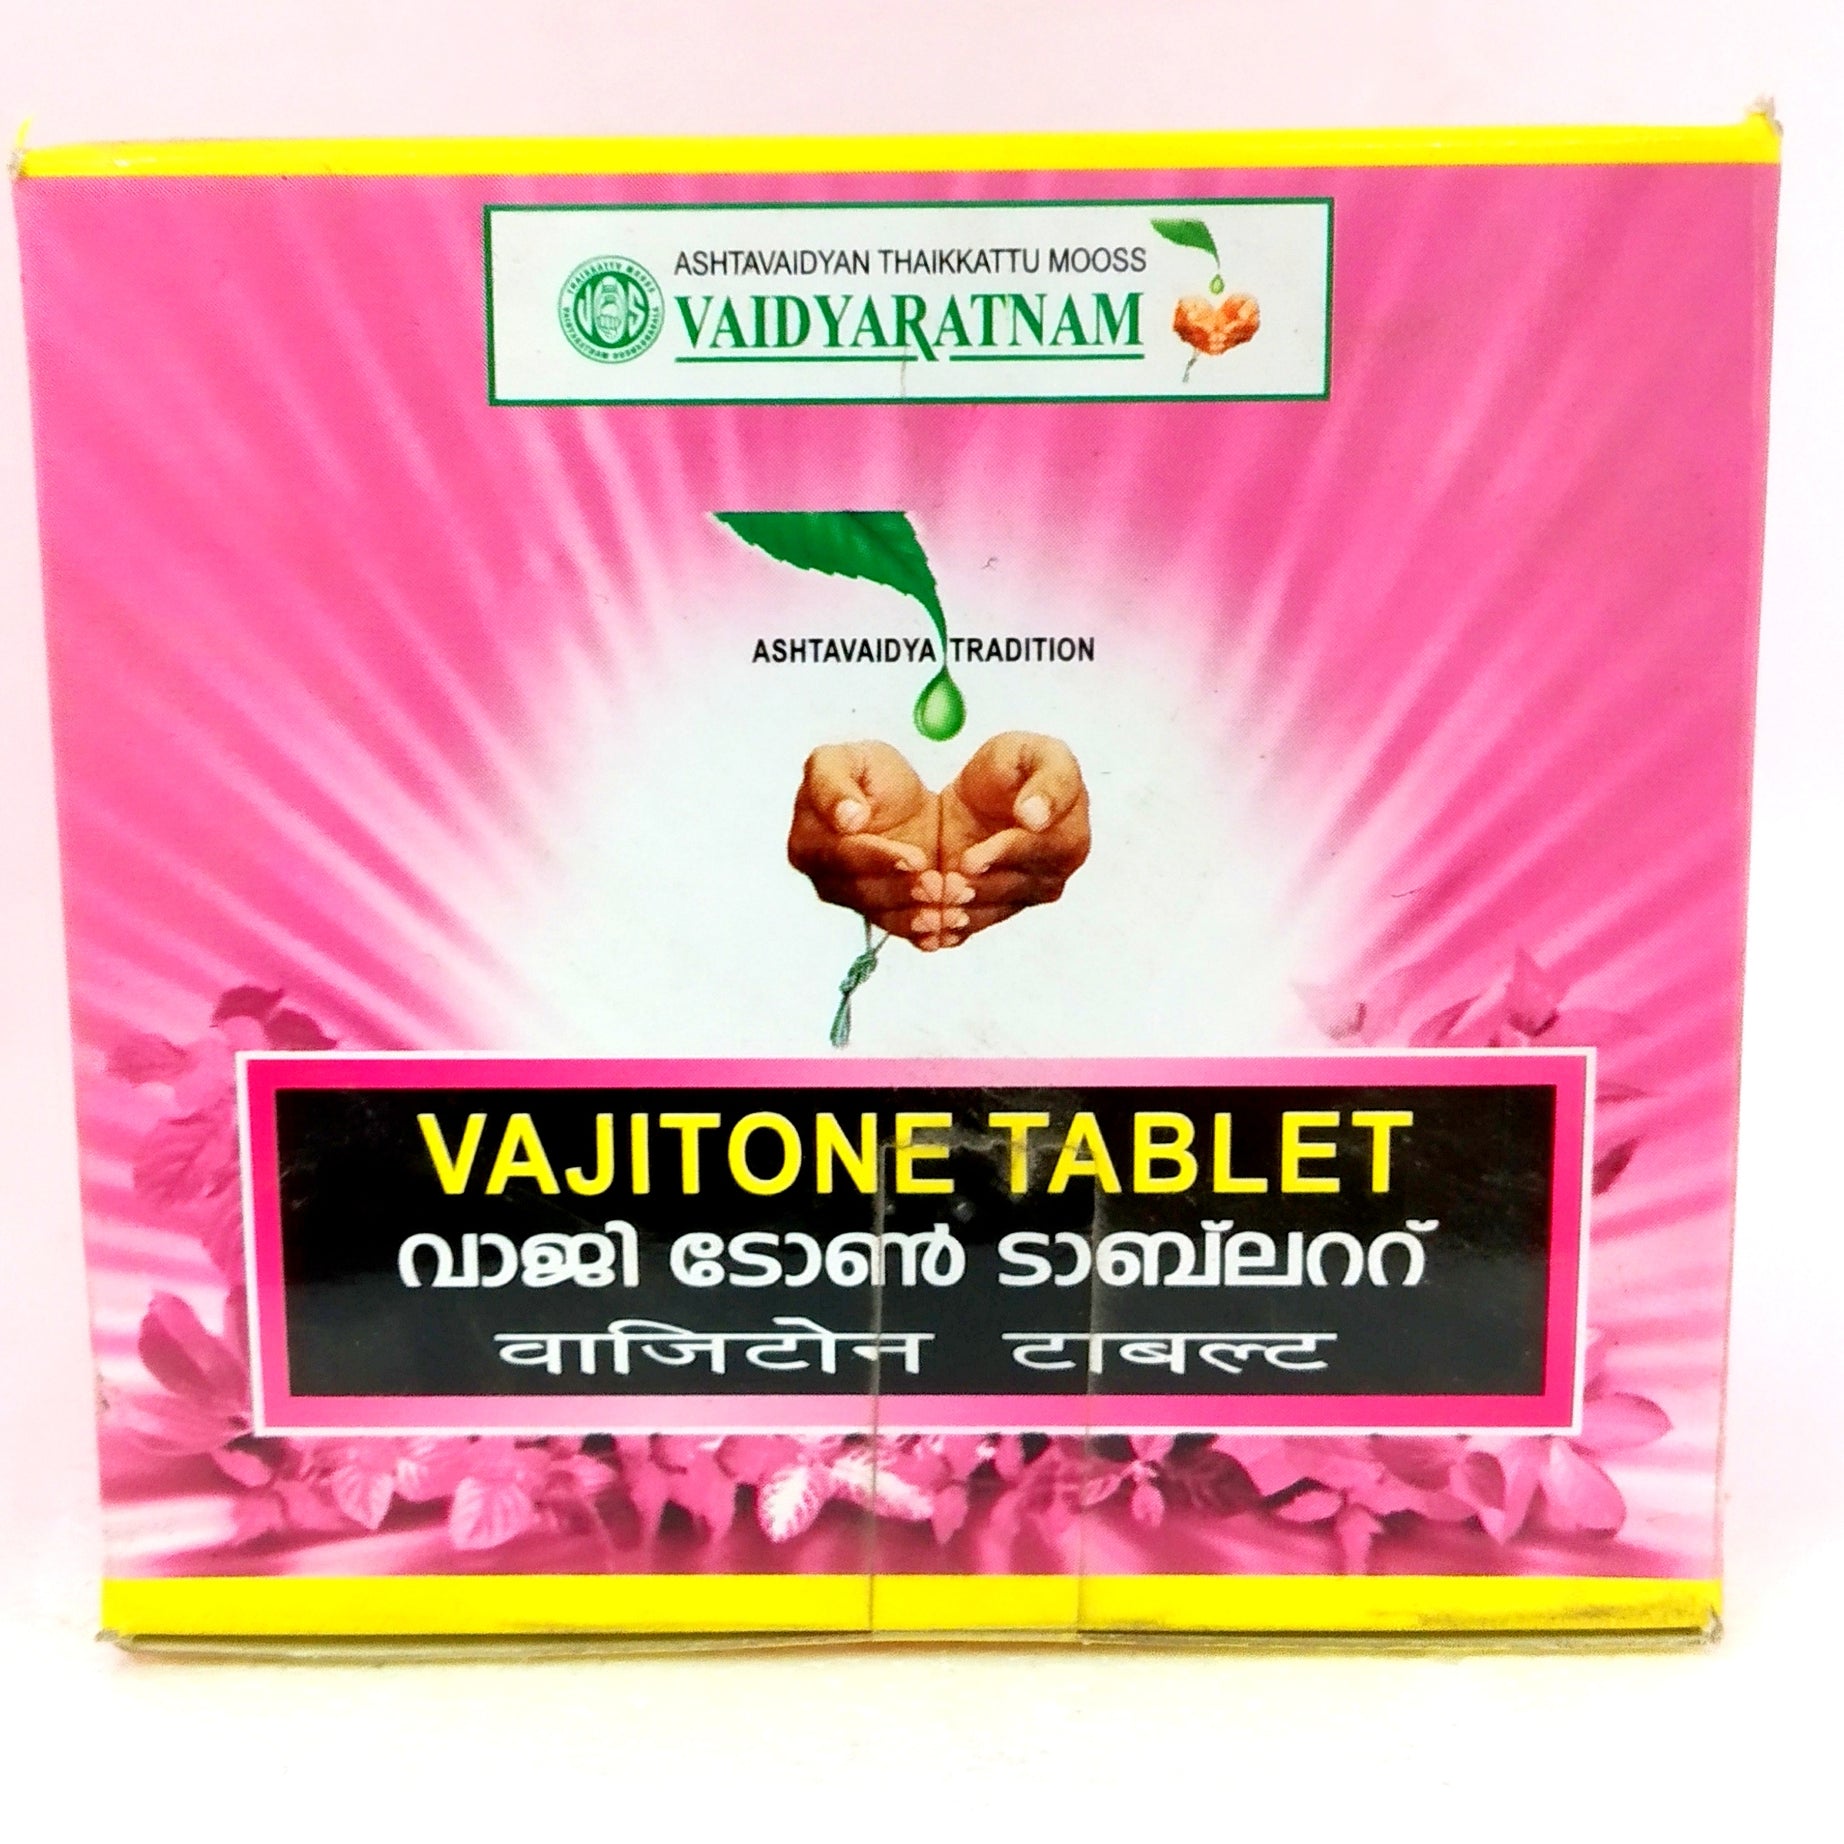 Shop Vajitone Tablets 10Tablets at price 64.00 from Vaidyaratnam Online - Ayush Care